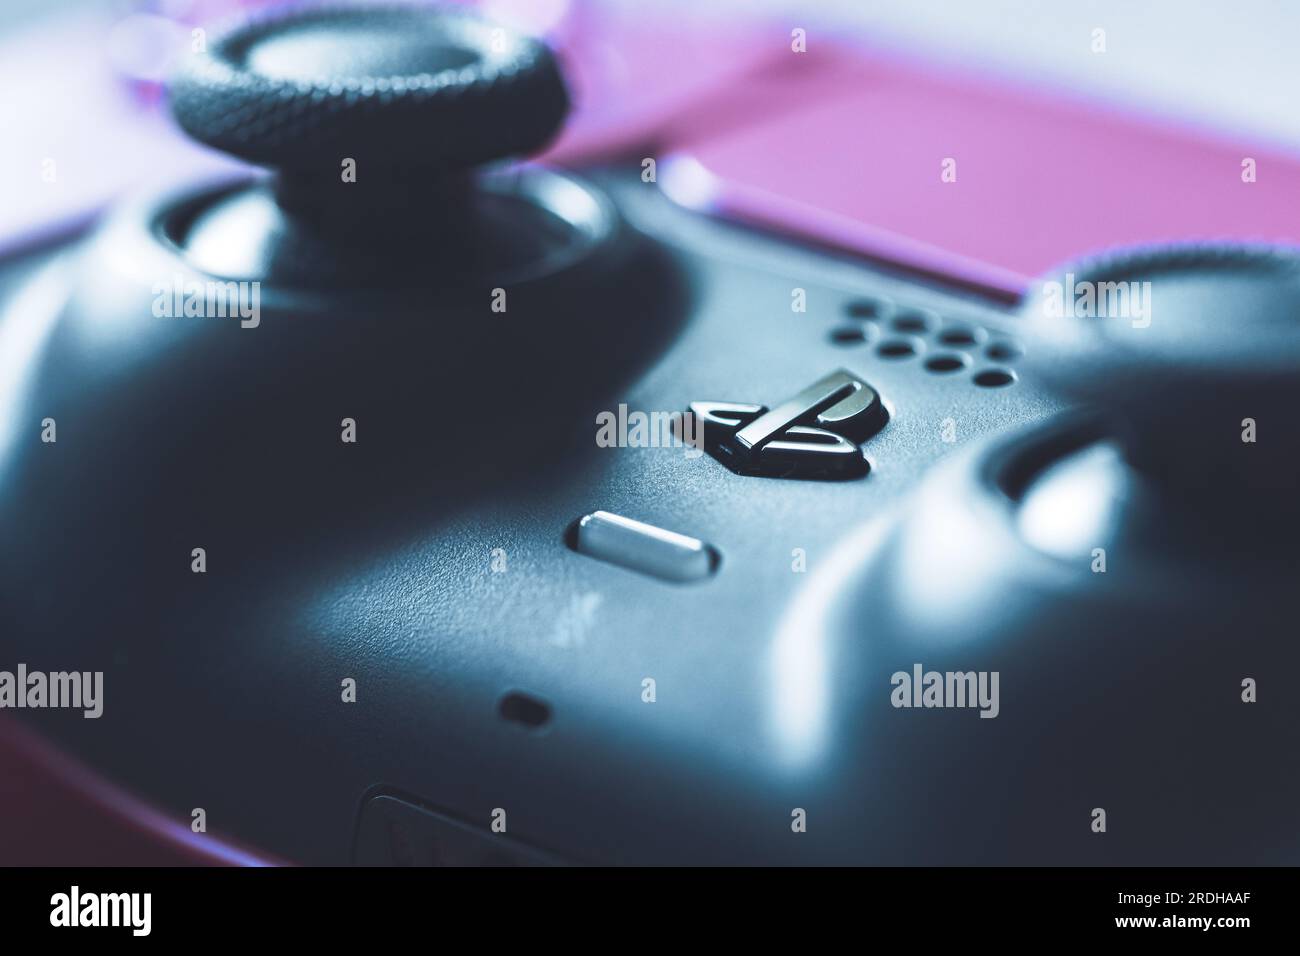 RF Generation: GameShark Lite (Sony PlayStation) Box Back Image